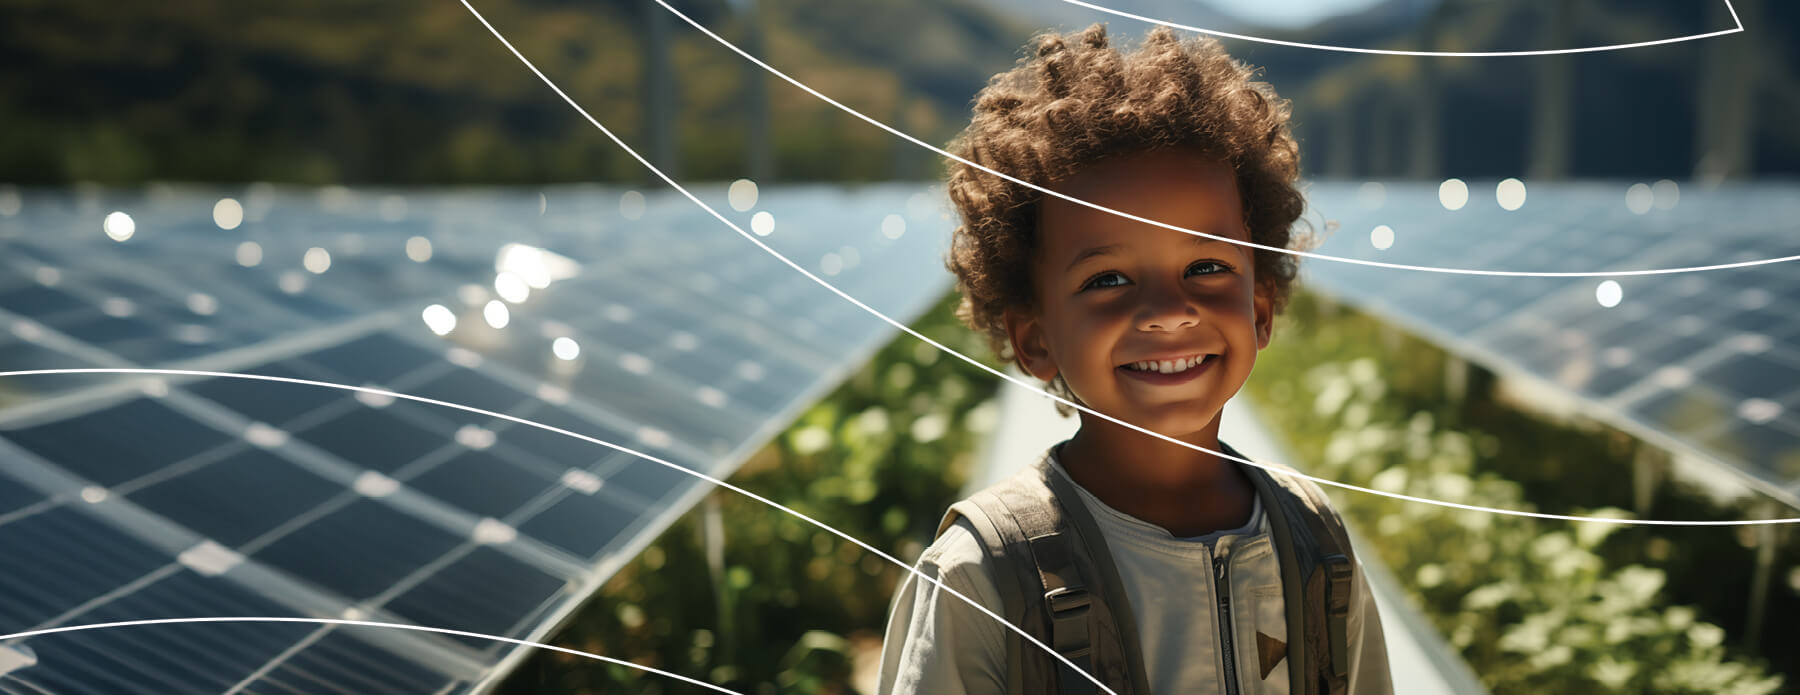 kid smiling next to solar panels